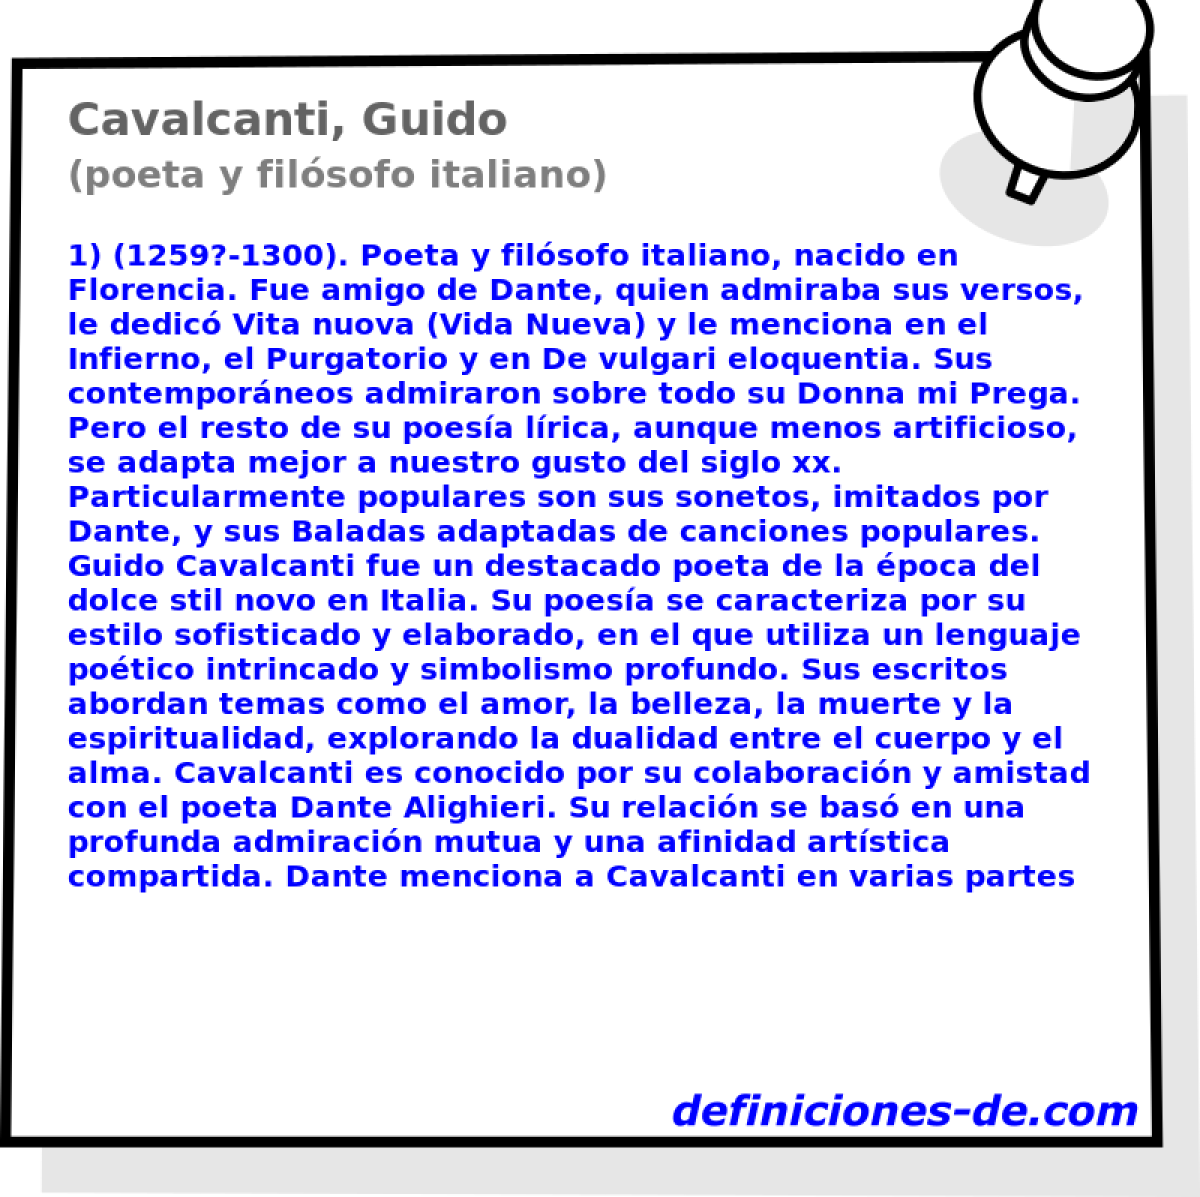 Cavalcanti, Guido (poeta y filsofo italiano)